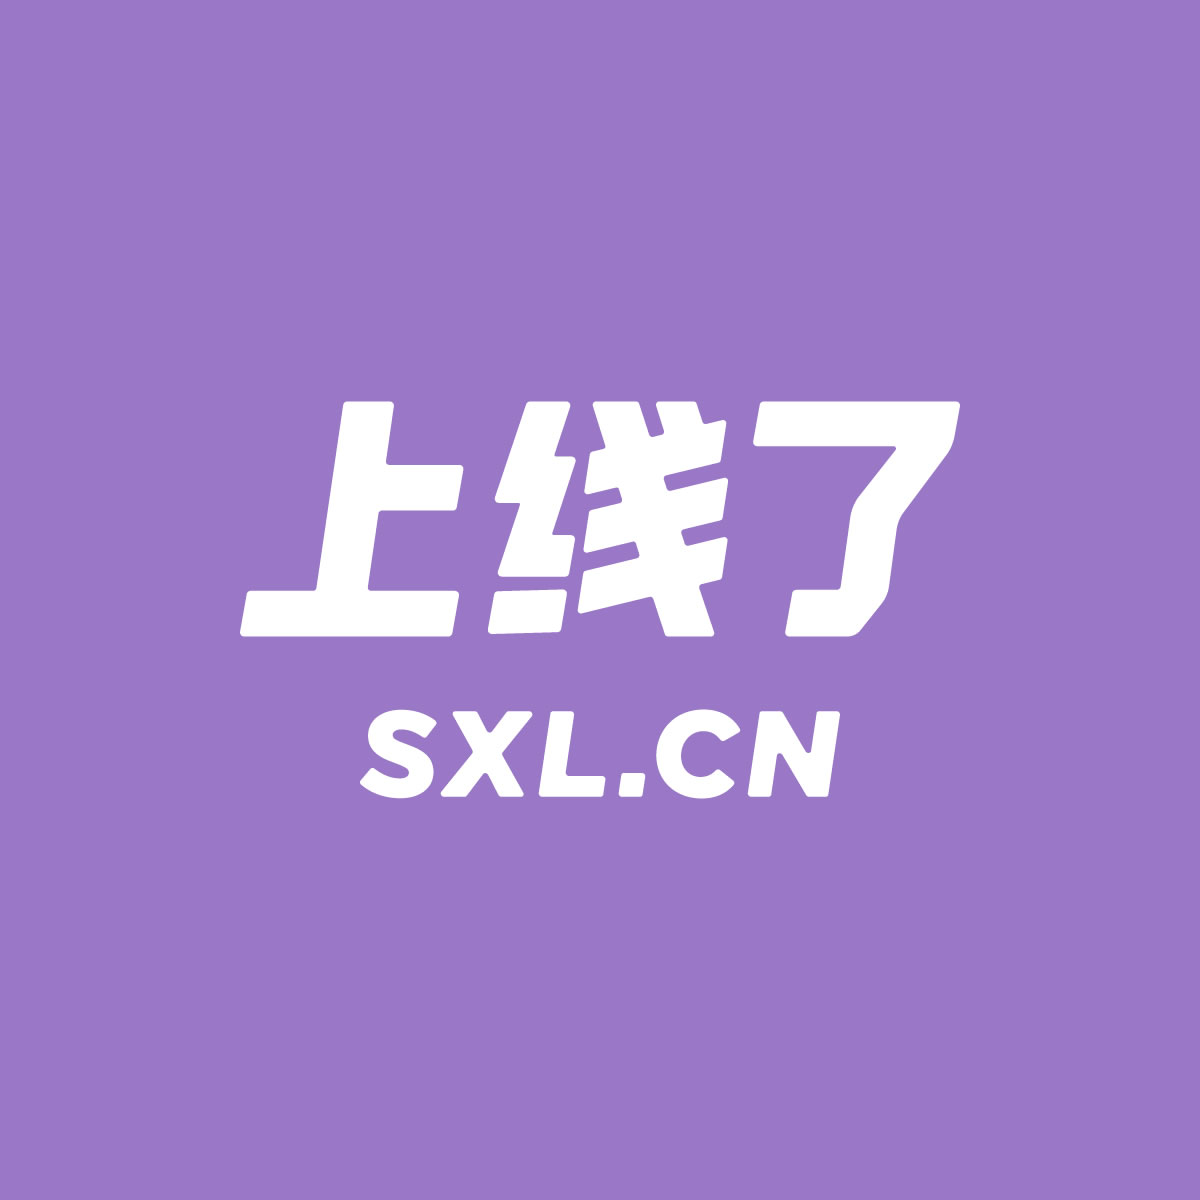 View 上线了sxl.cn_免费建站_自助建站_免费网站建设_小程序制作 outages and uptime